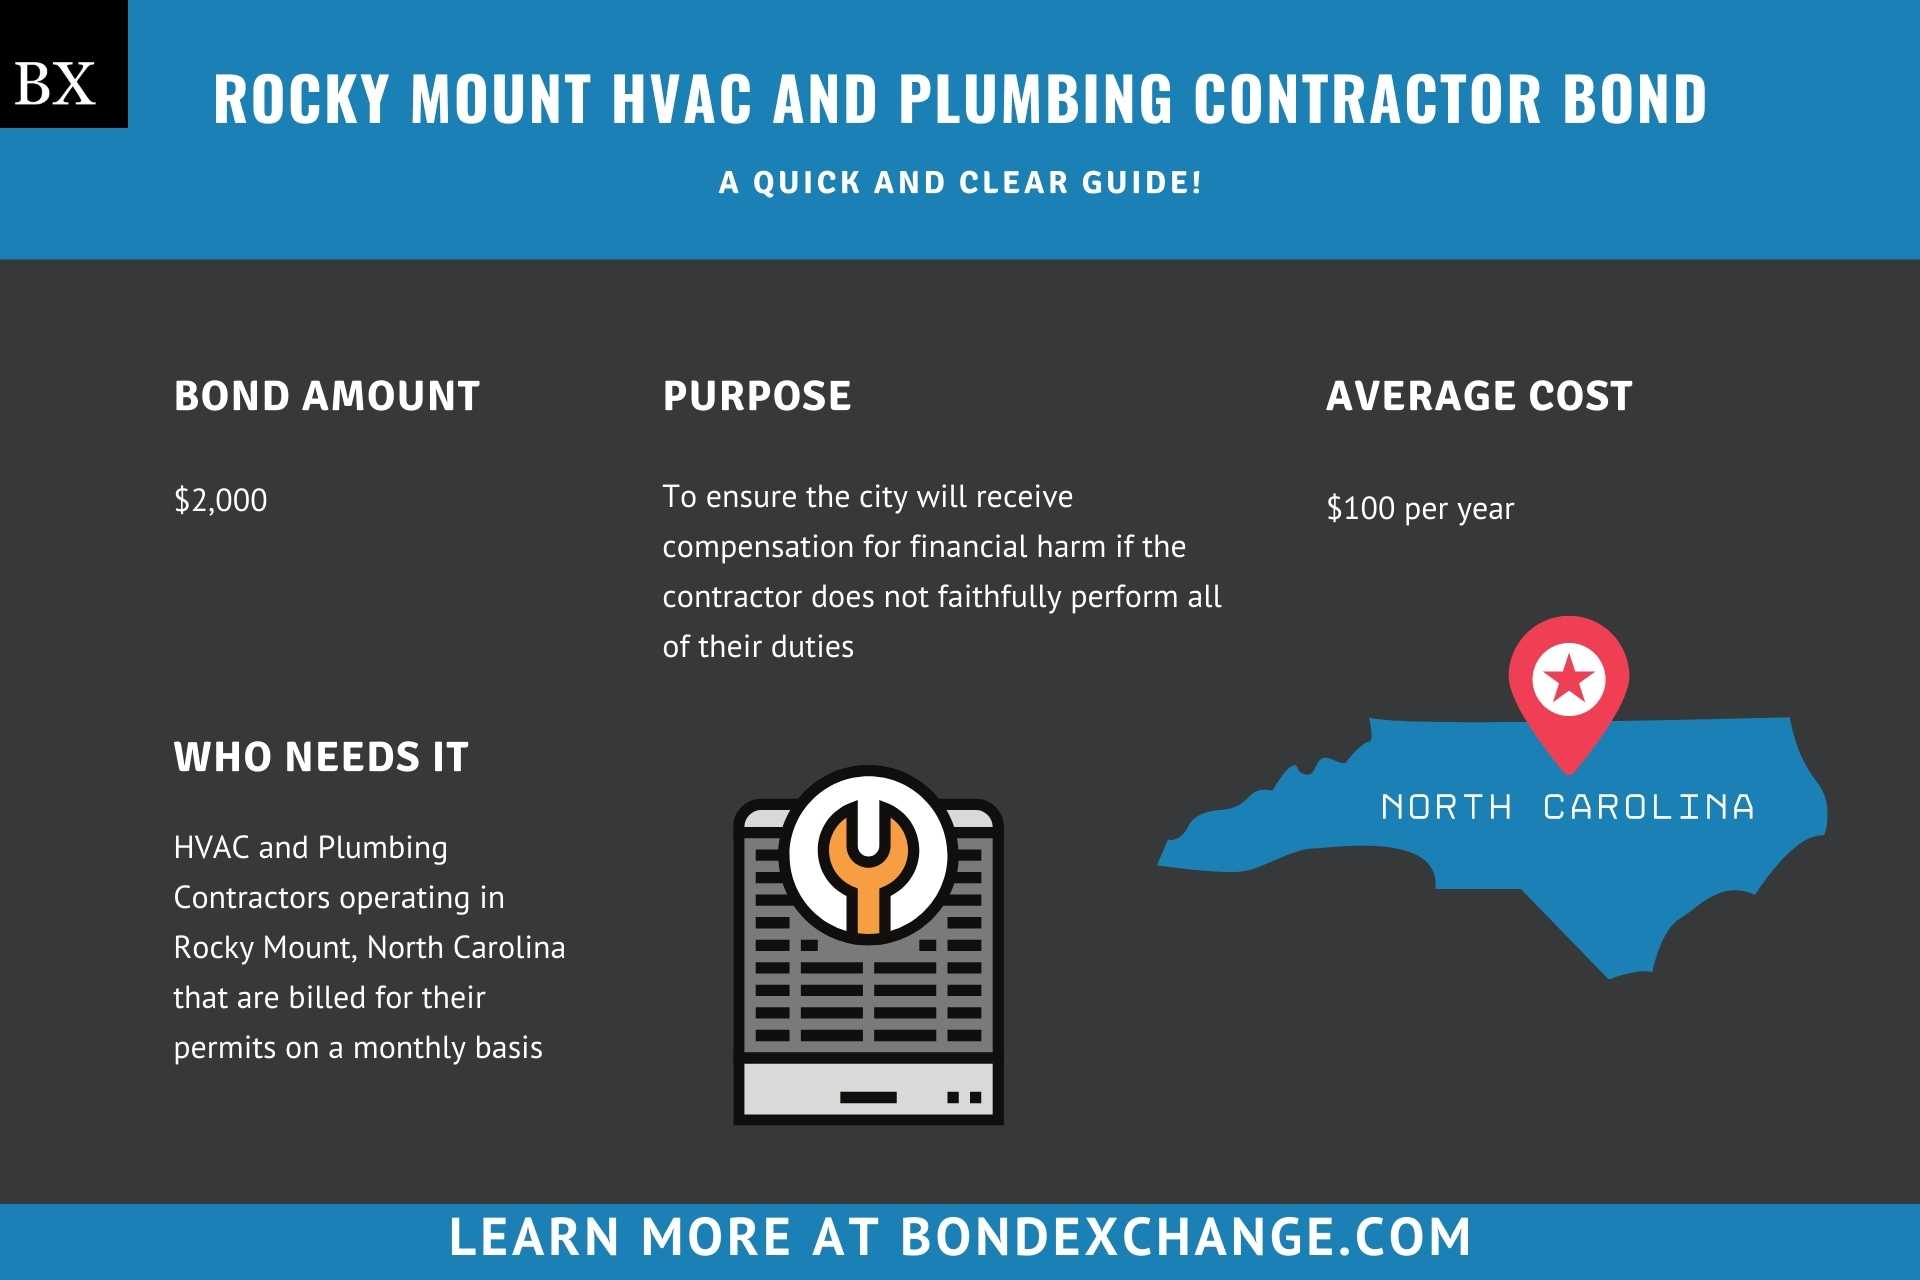 Rocky Mount HVAC and Plumbing Contractor Bond